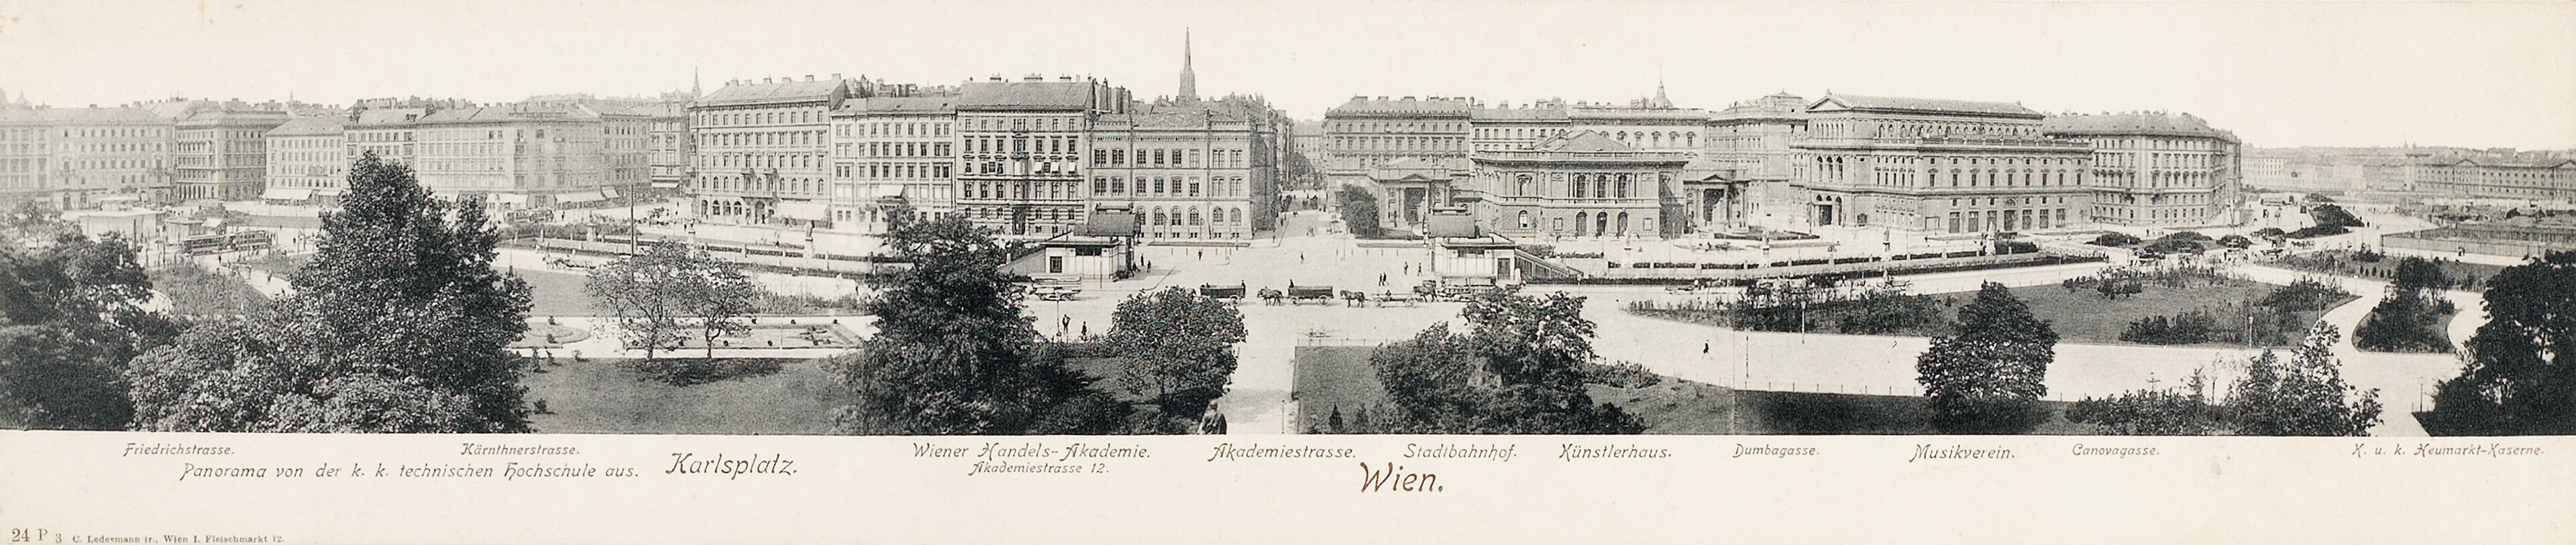 Panorama-Ansichtskarten vom Karlsplatz, 1902, Verlag: C. Ledermann, Wien Museum, Inv.-Nr. 216.995 bzw. Inv.-Nr. 216.996 